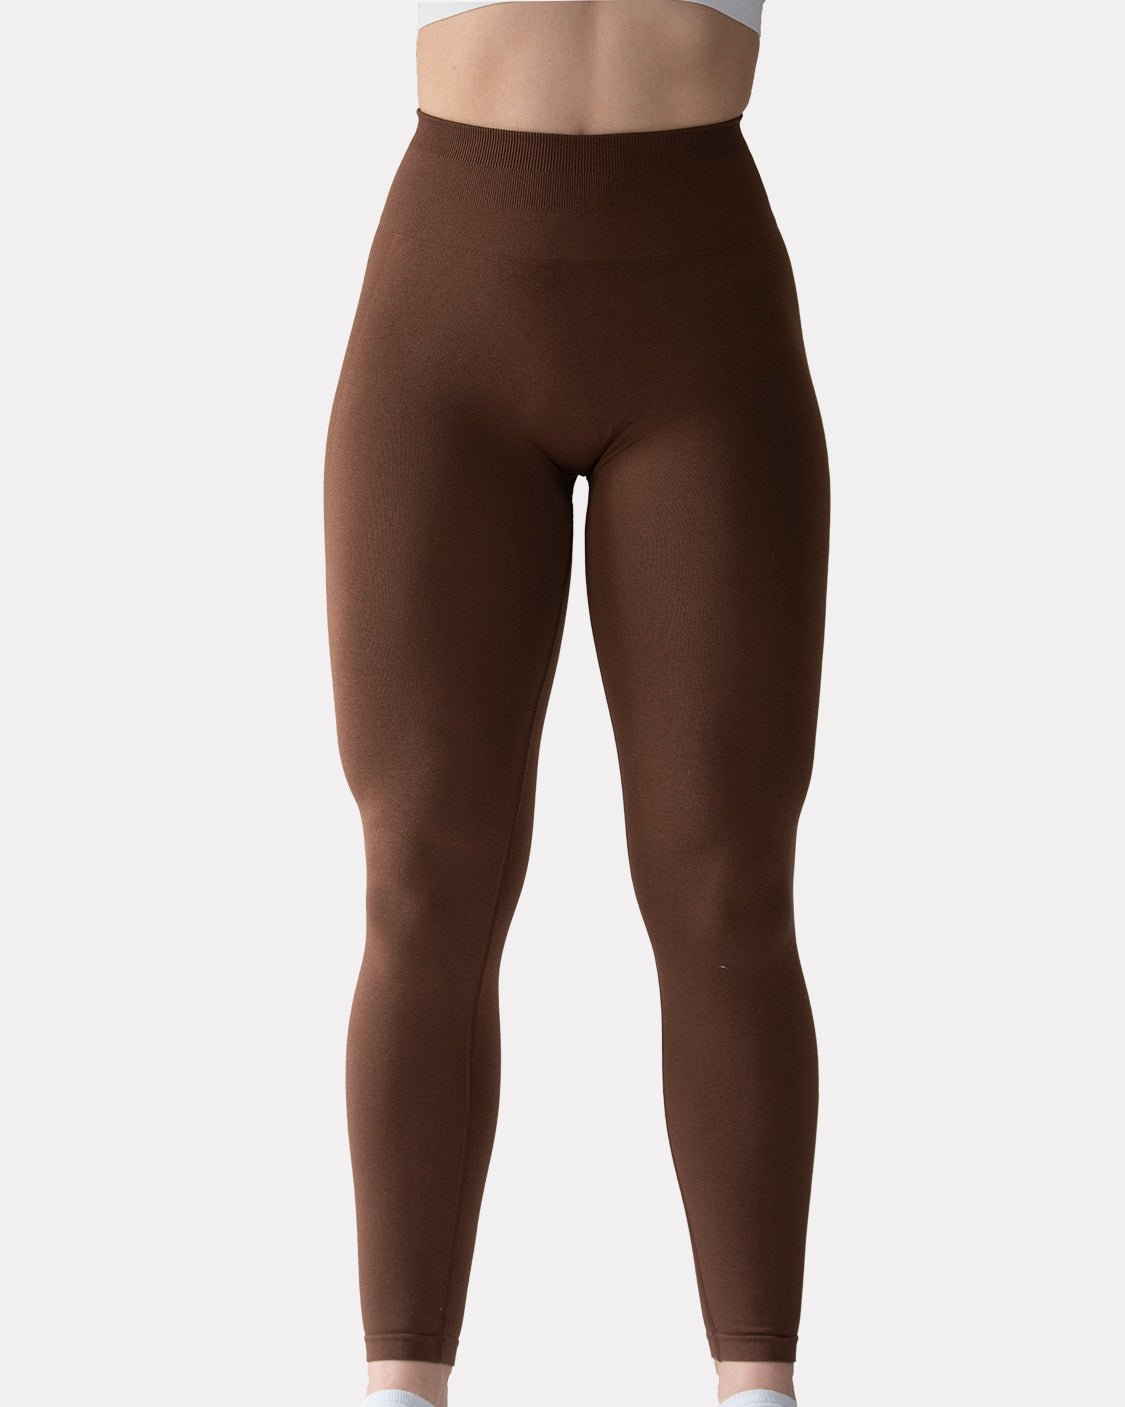 AUROLA Intensify leggings in brown, Women's Fashion, Activewear on